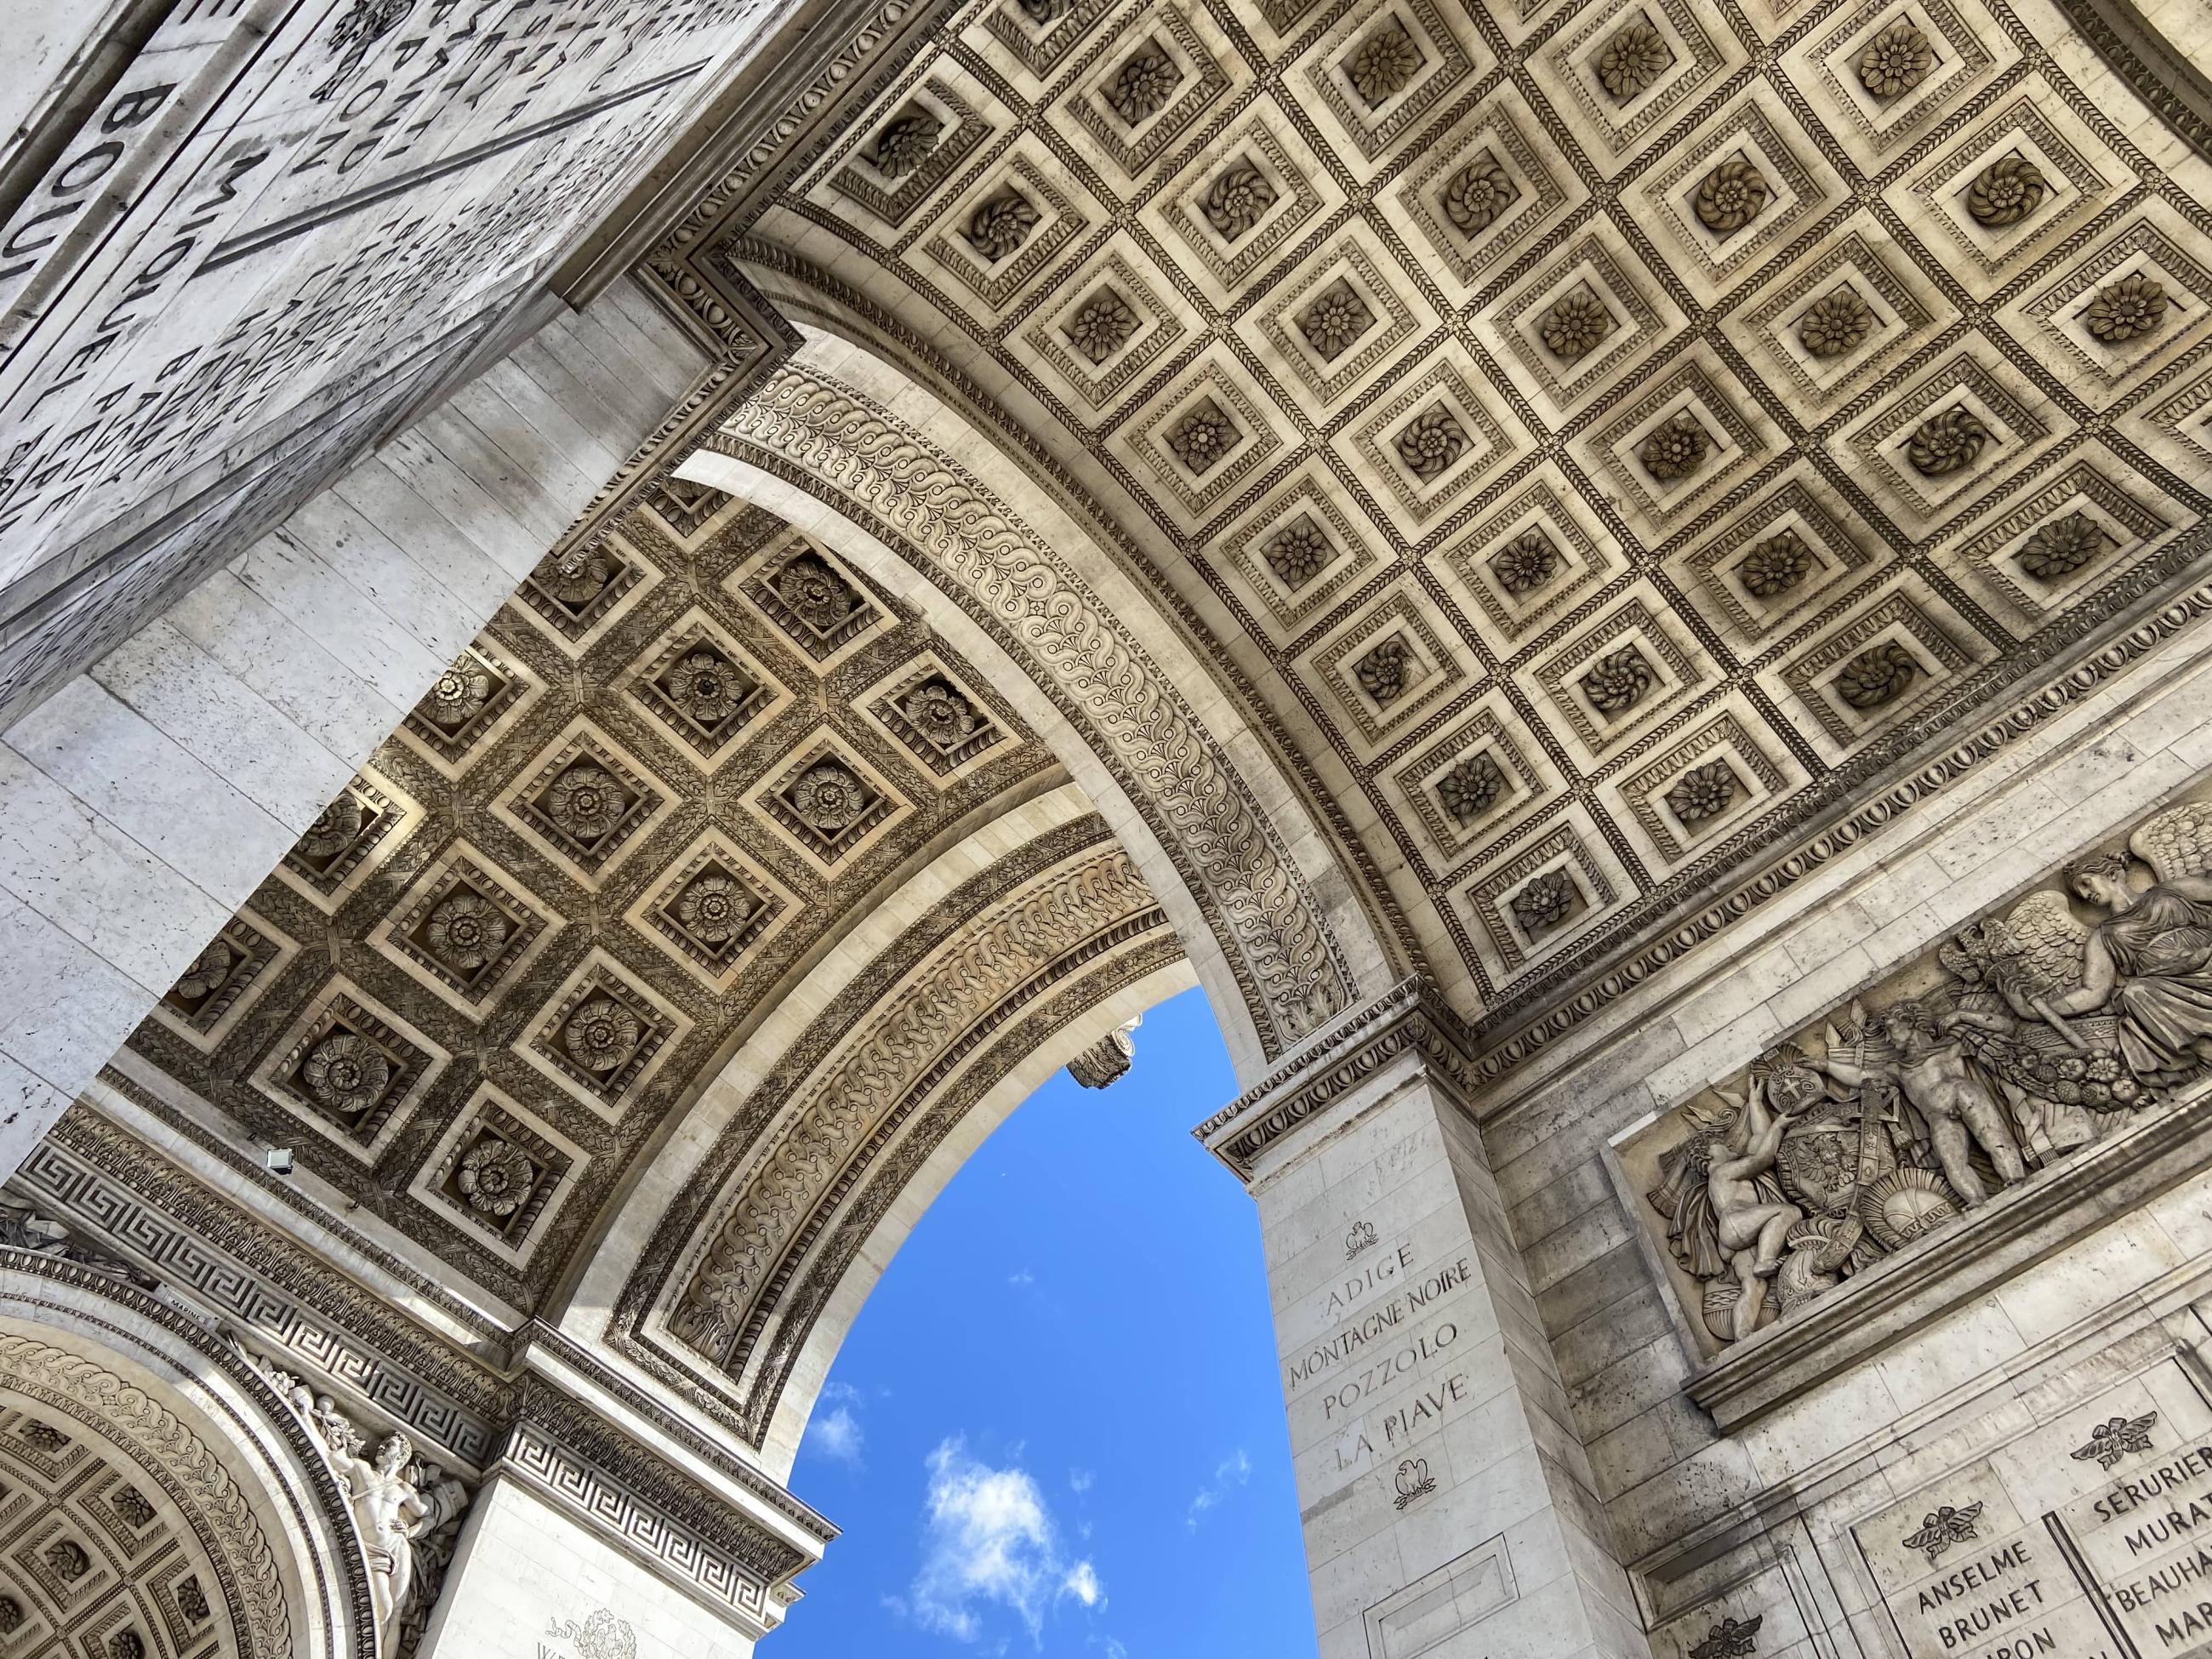 Arc de Triomphe, Paris, France: Looking at the Arc de Triomphe from below 9/19/2022